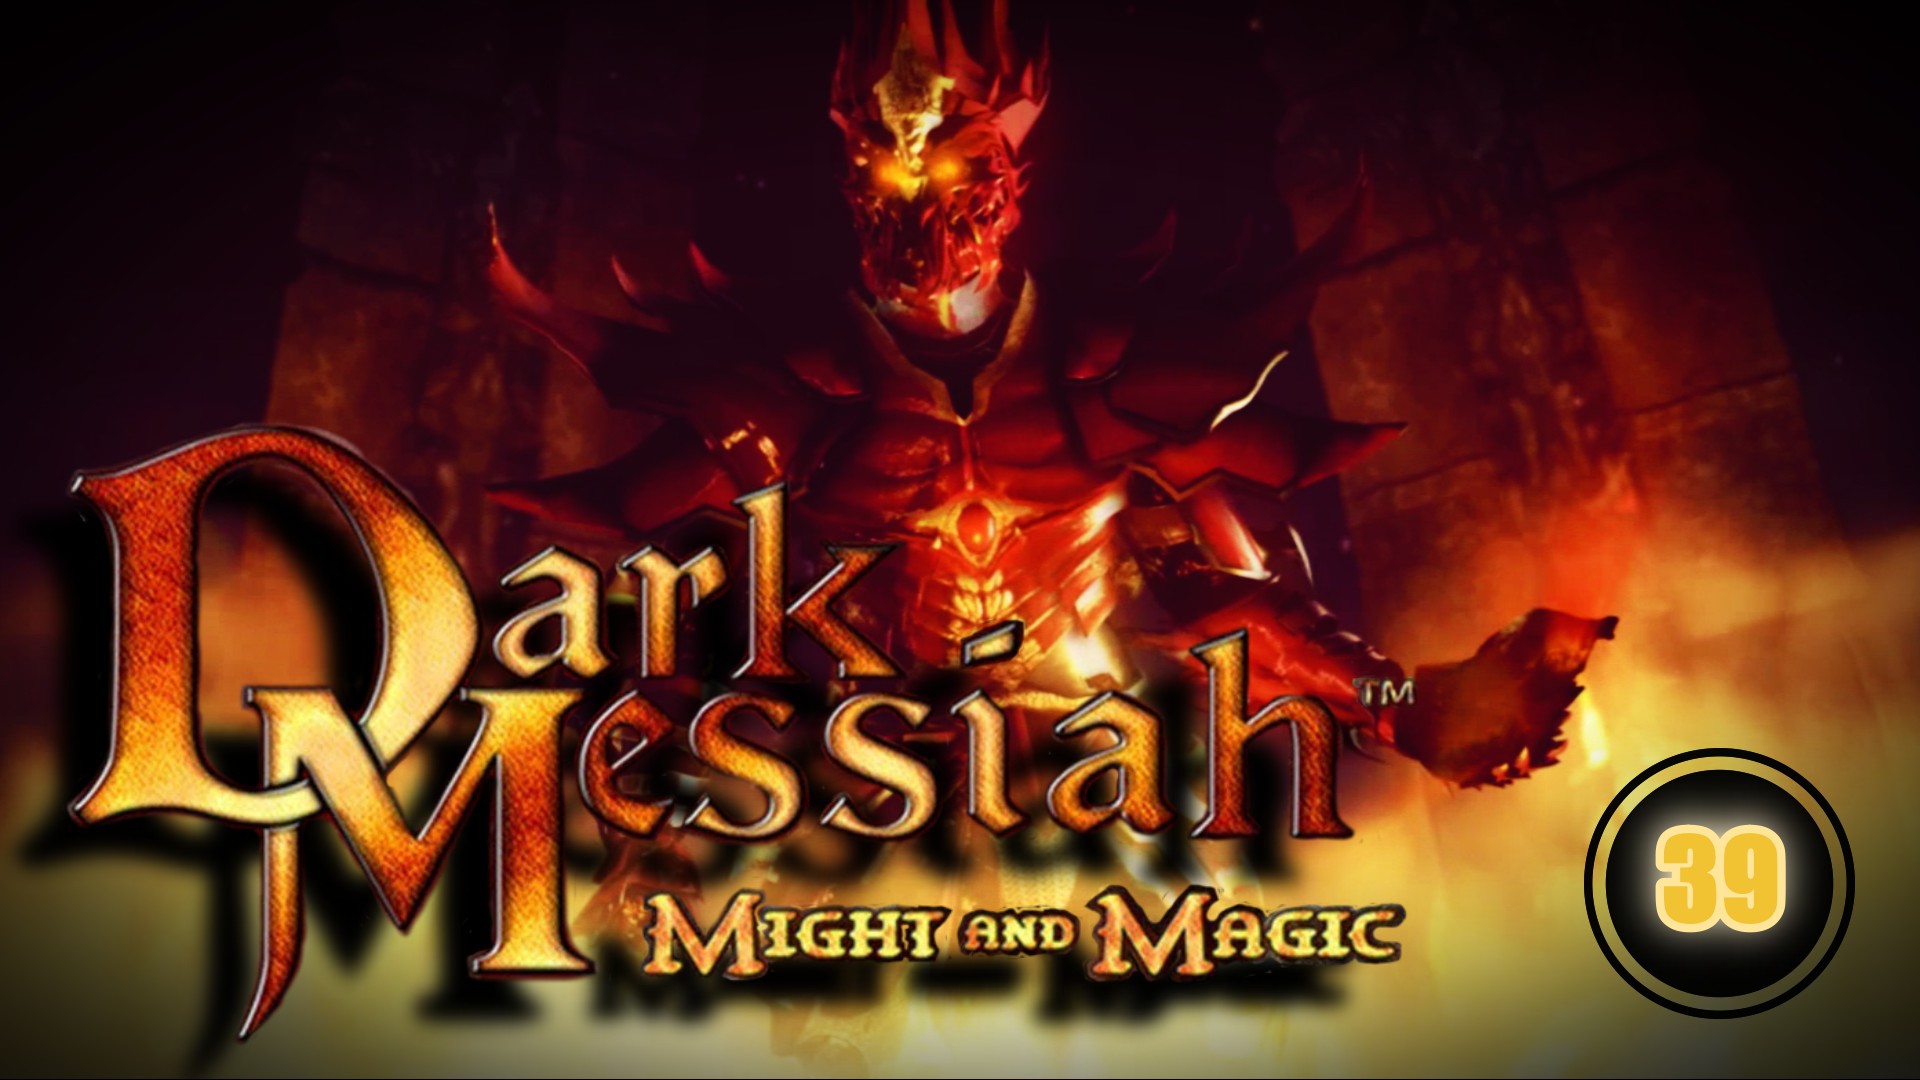 Dark Messiah of Might and Magic 39